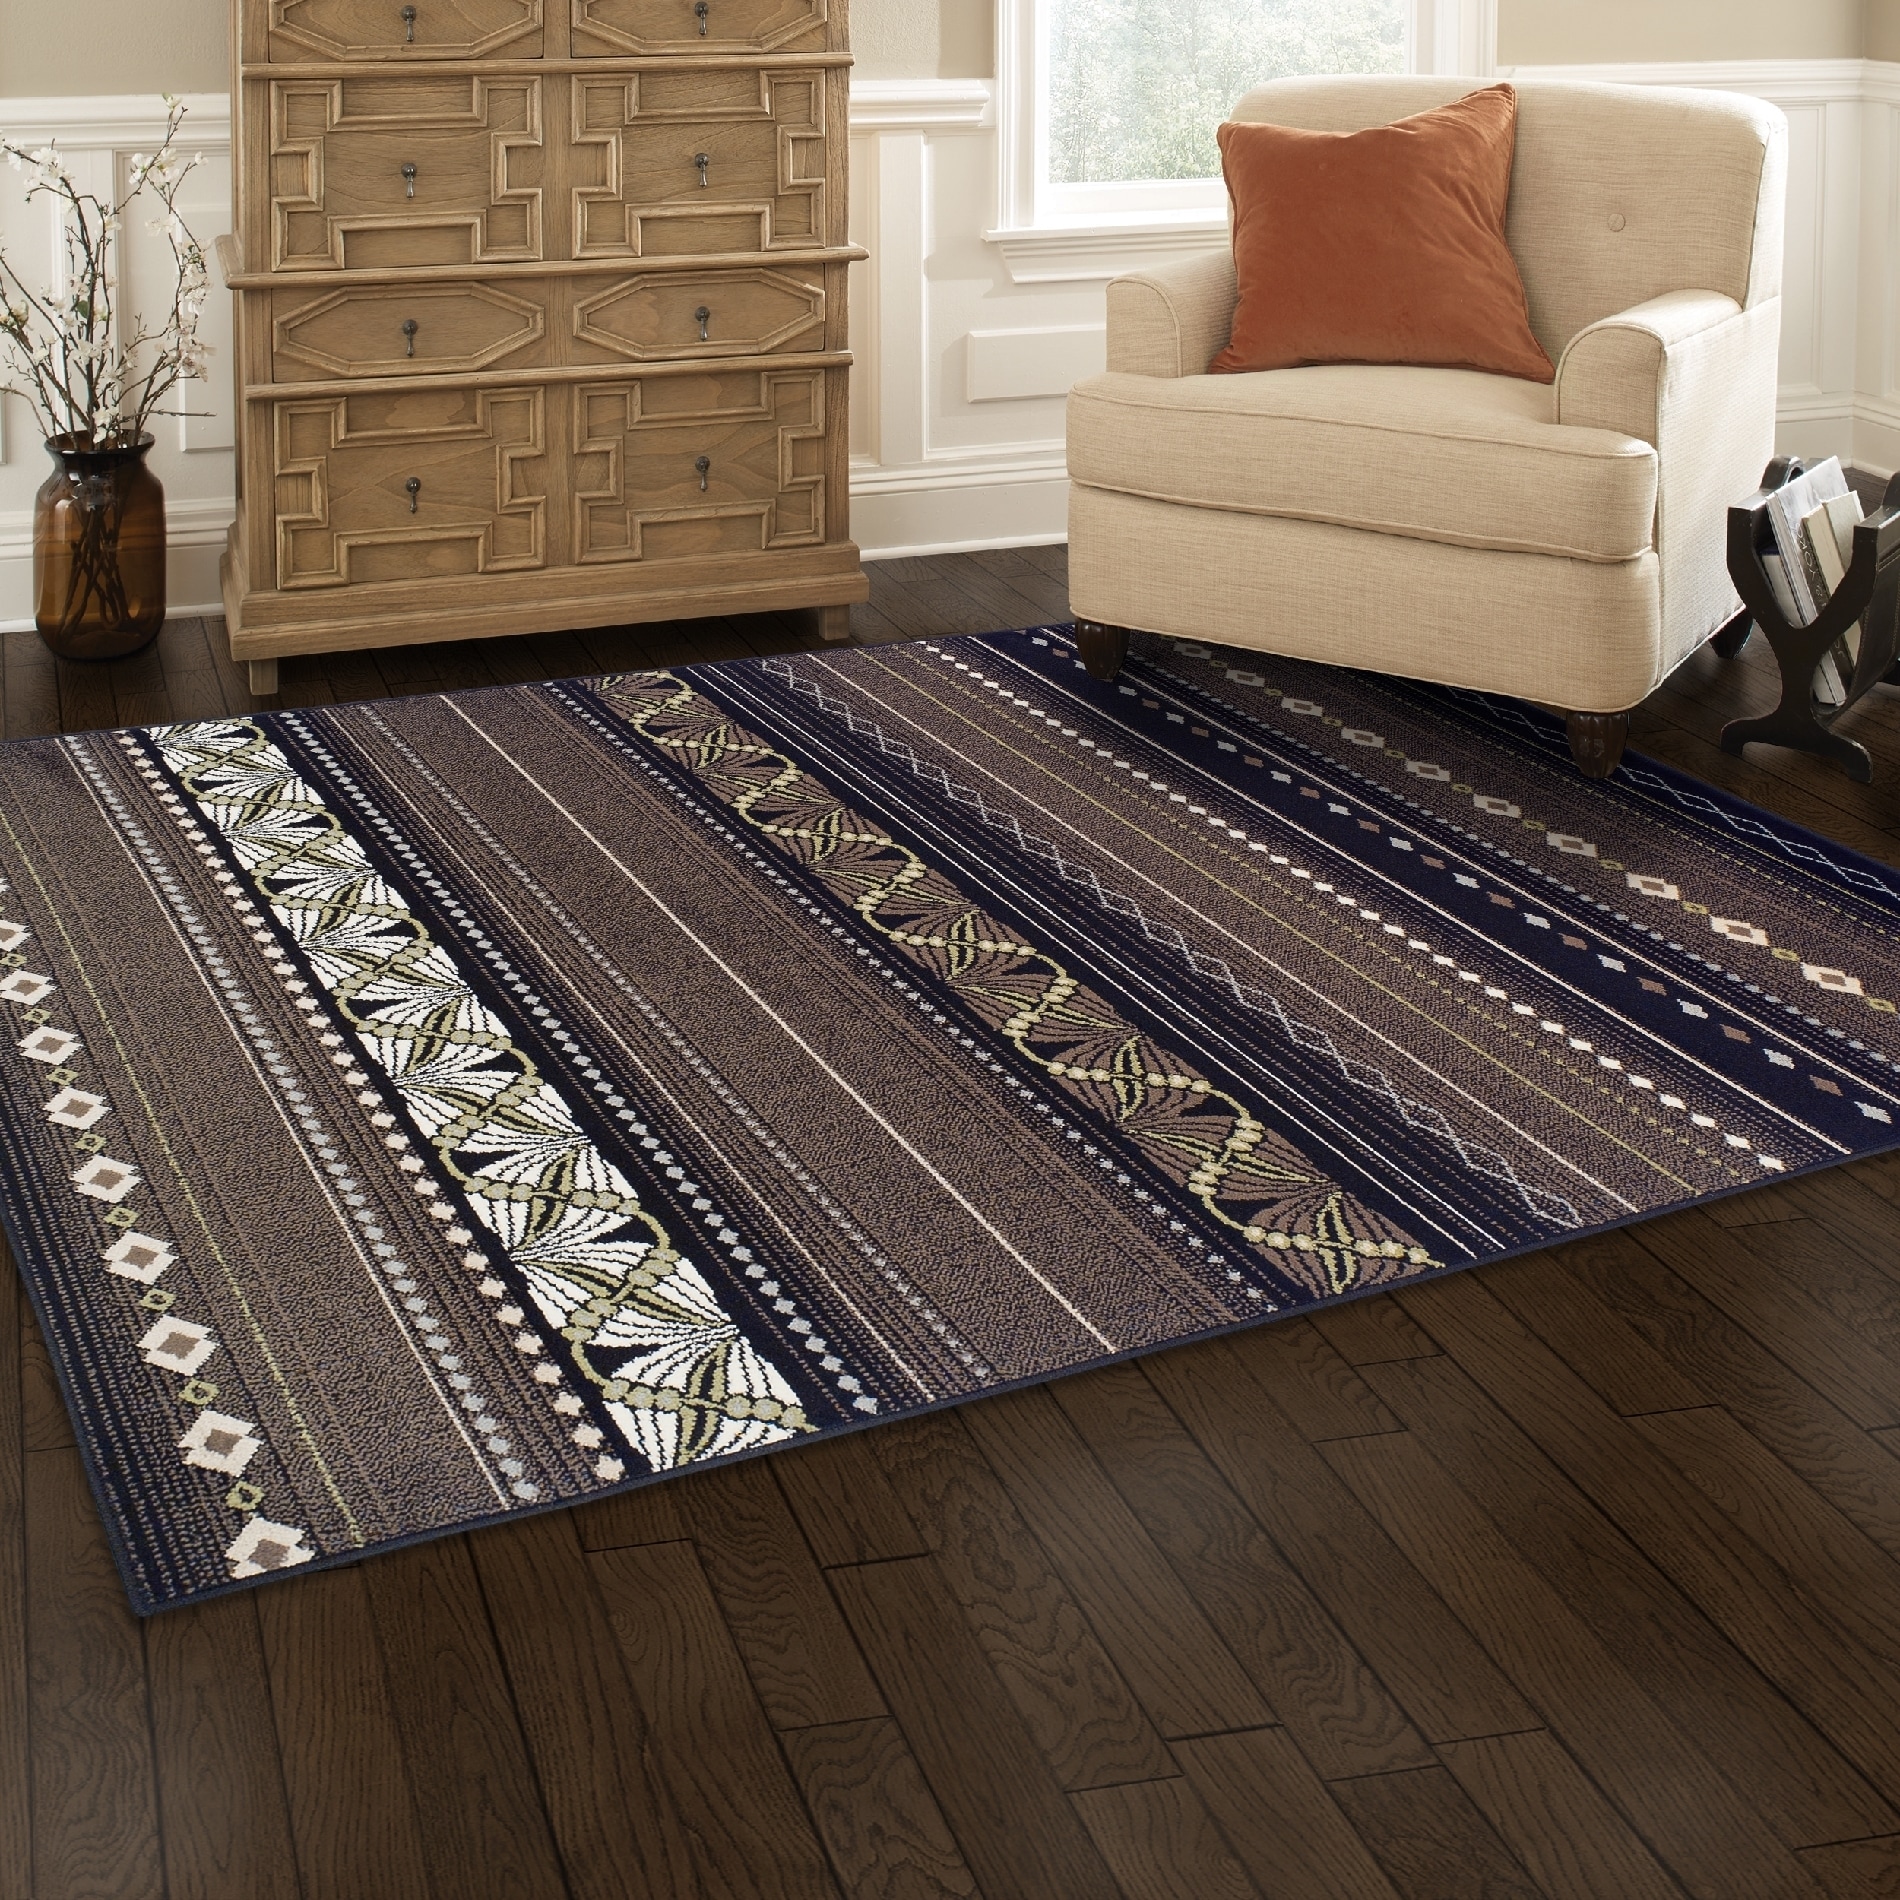 4x6 area rugs canada